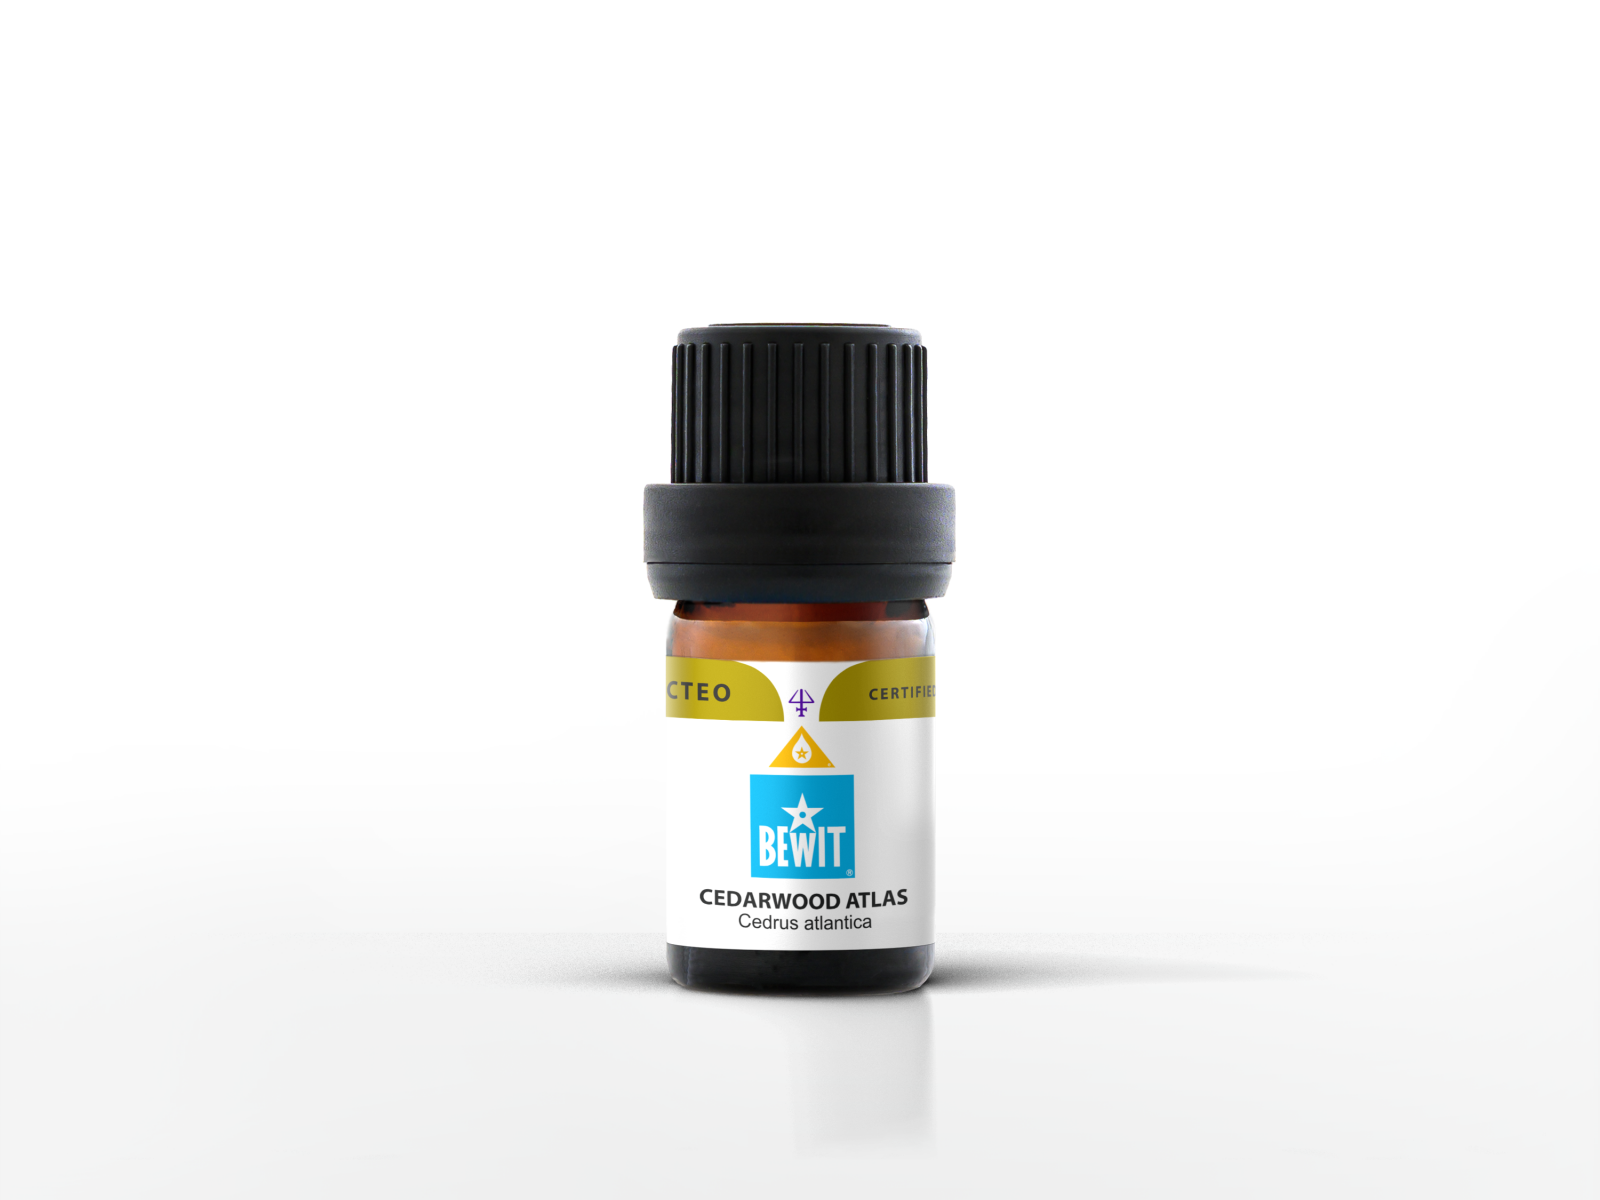 BEWIT Atlas cedar - 100% pure and natural CTEO® essential oil - 4